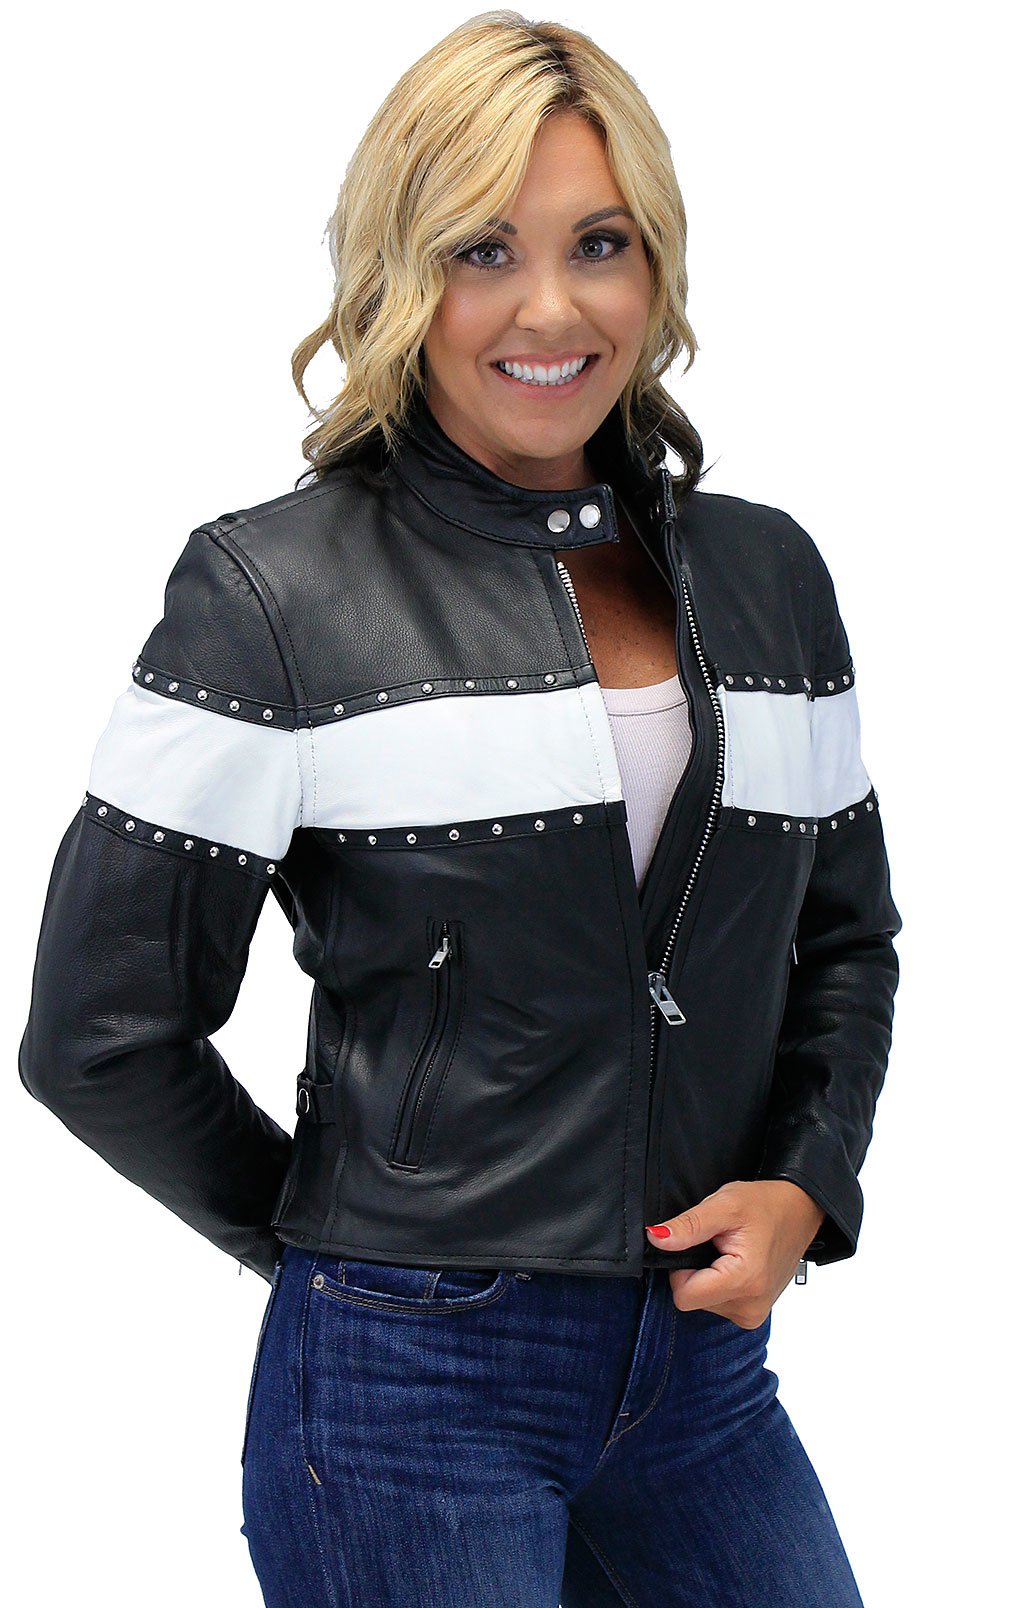 Womens White Motorcycle Leather Jacket